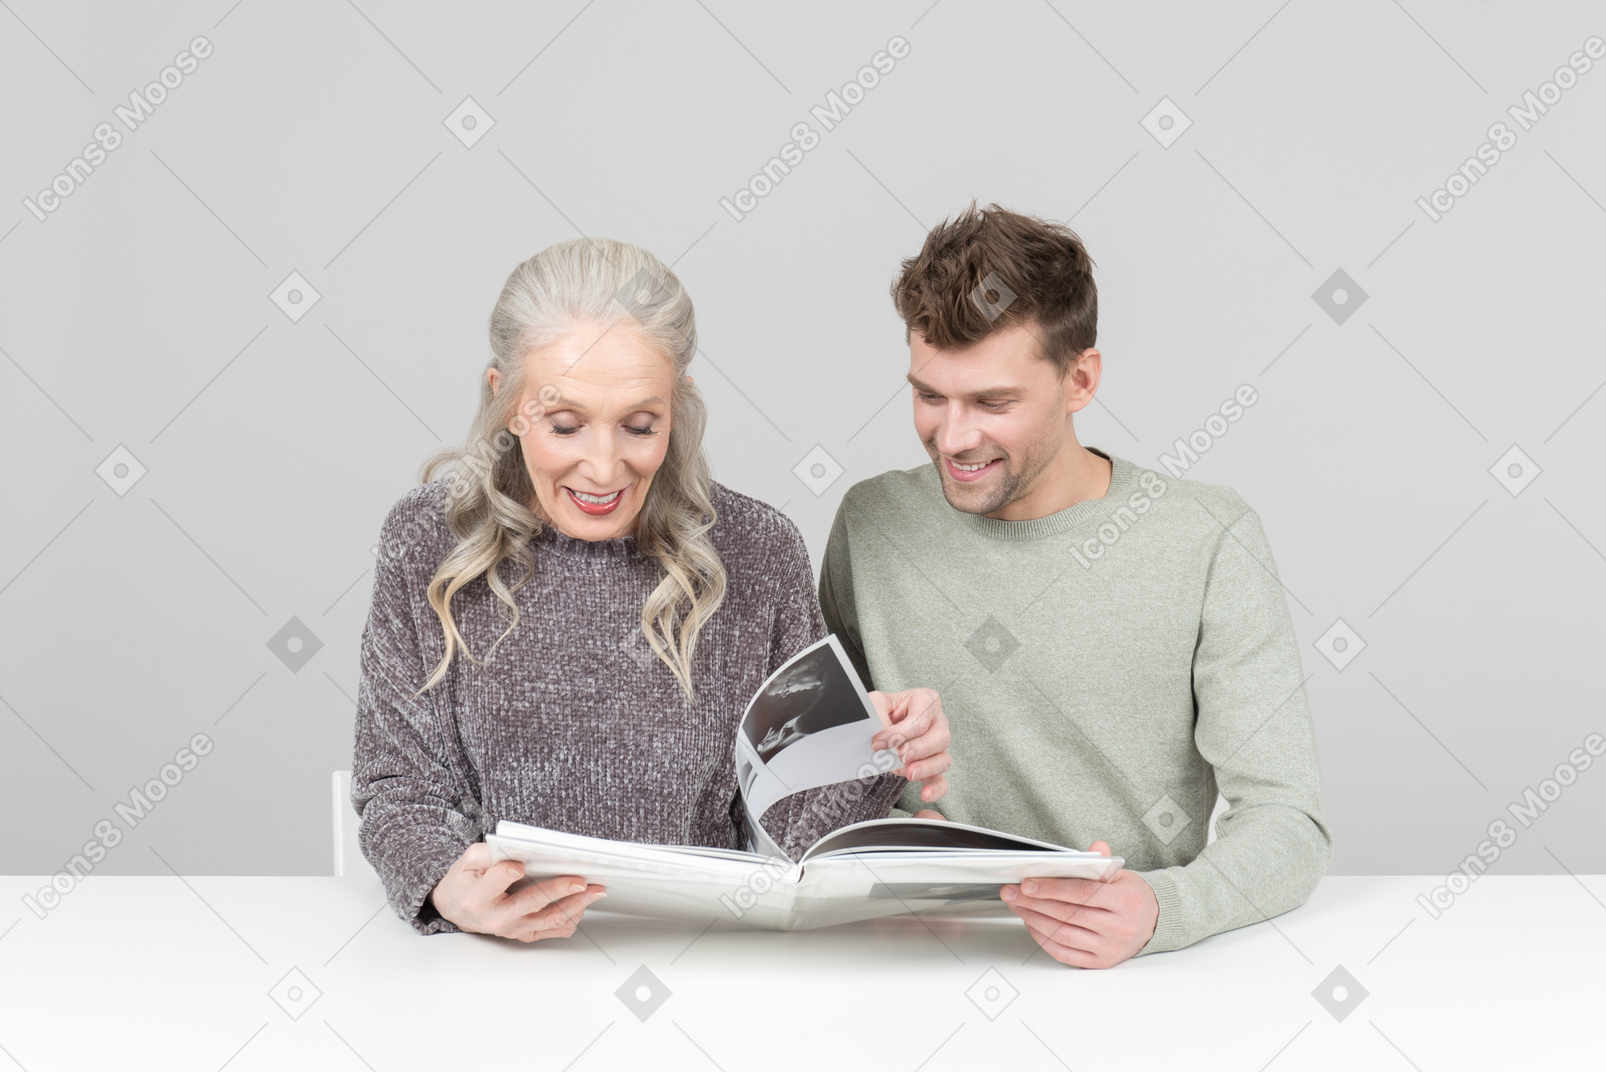 Browsing through a family photo album together